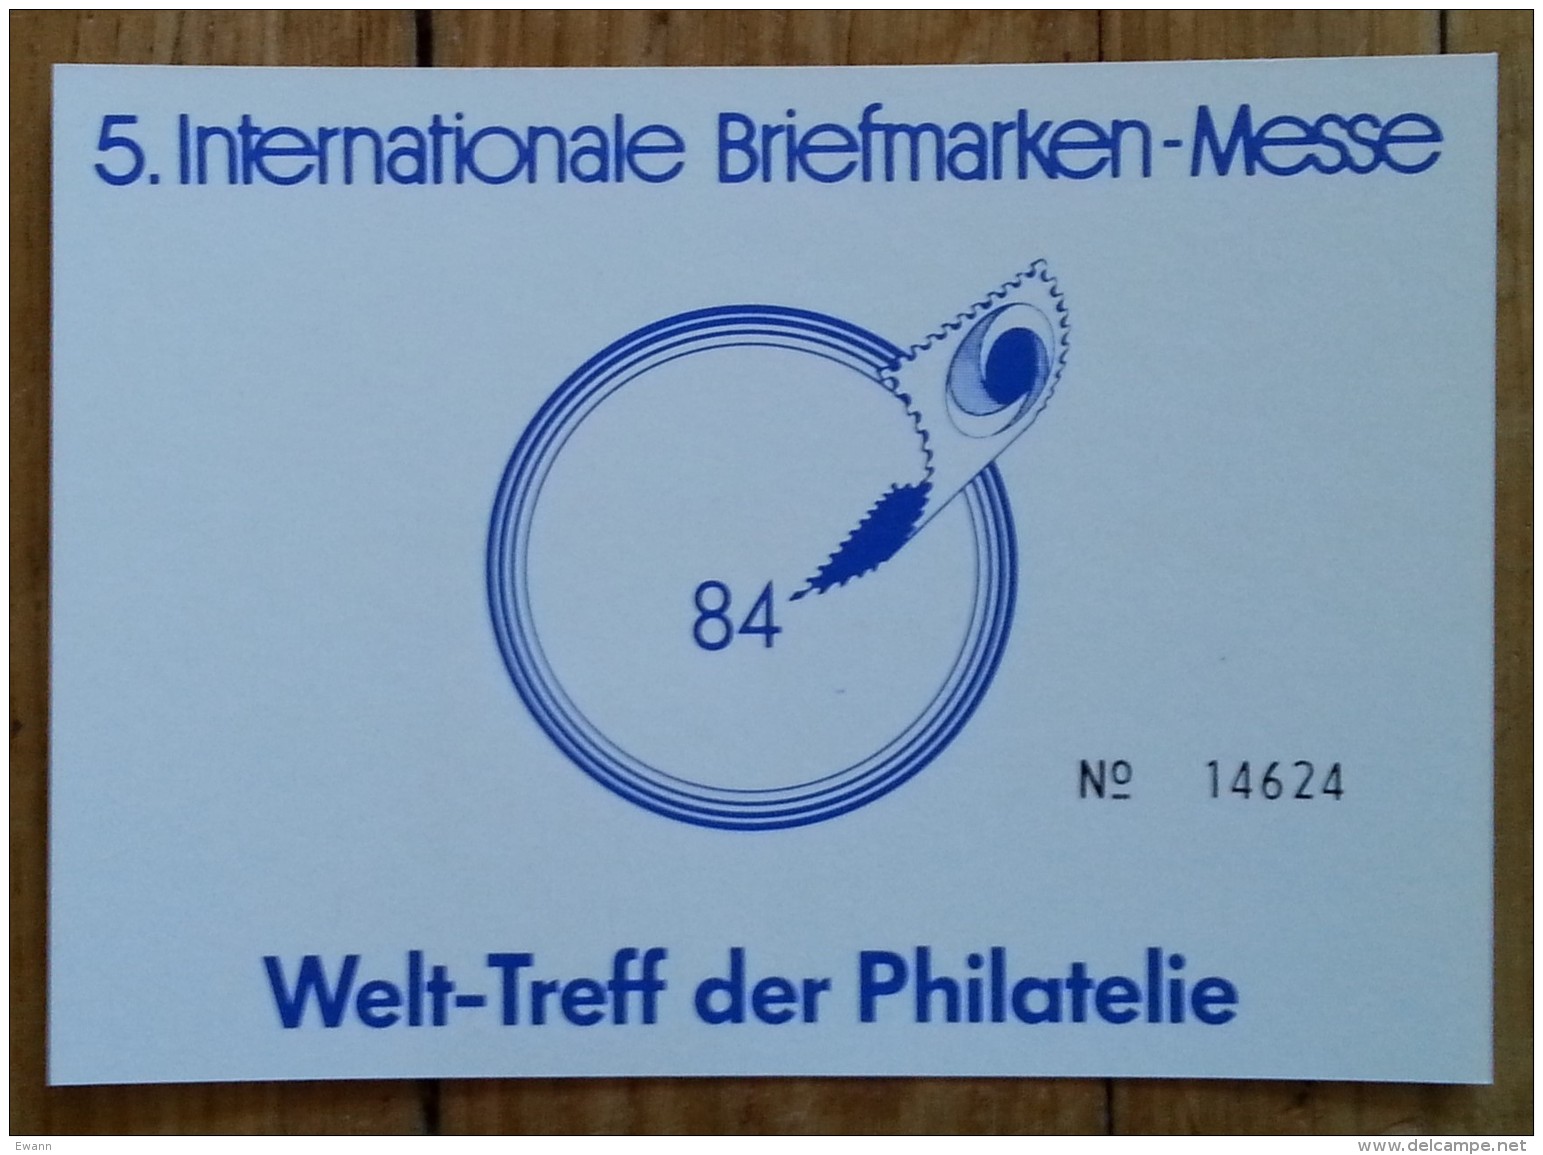 ISLANDE - Timbre De Distributeur - International Briefmarken Messe - ESSEN - 1984 - Franking Labels